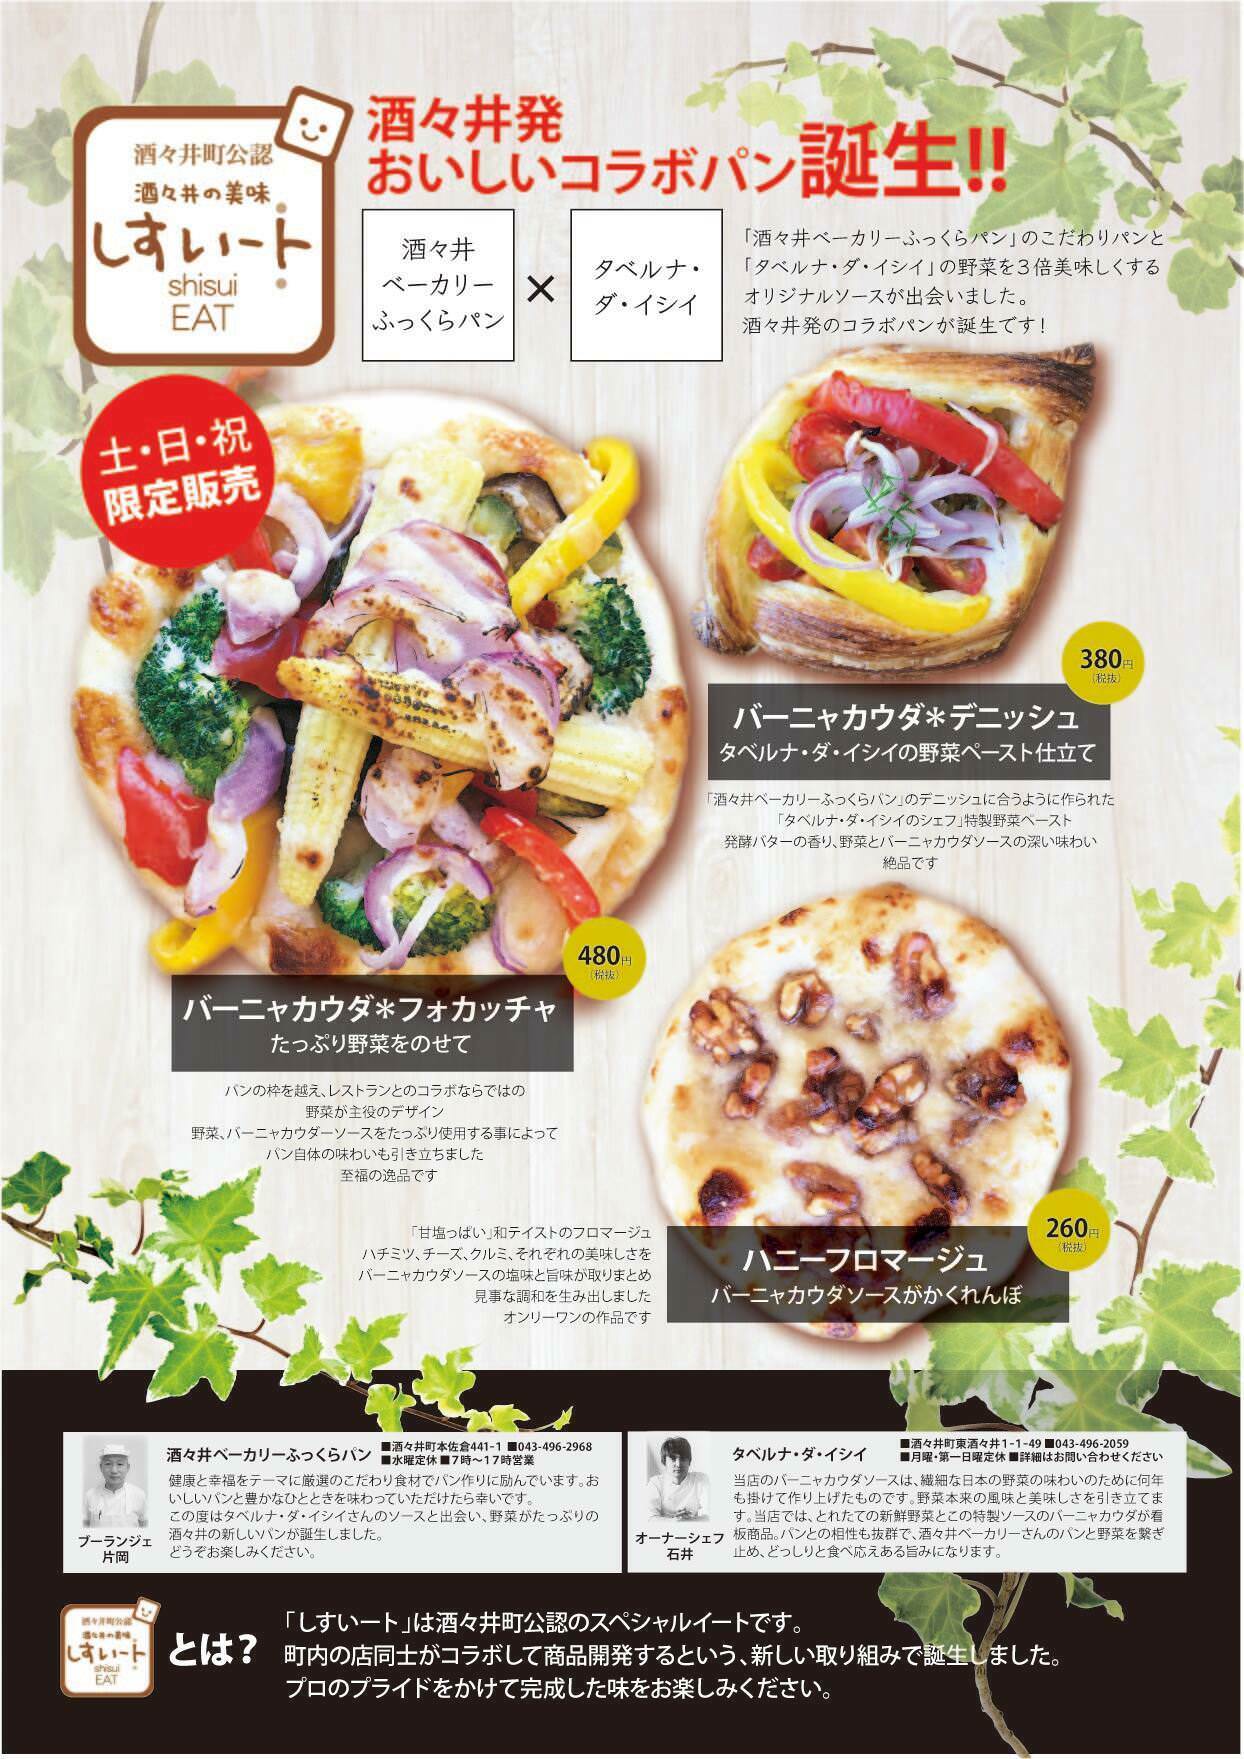 【ELOISE’s Cafe】名古屋久屋大通公園店 ディナーメニューから人気のお料理を厳選したコース料理が出来ました！